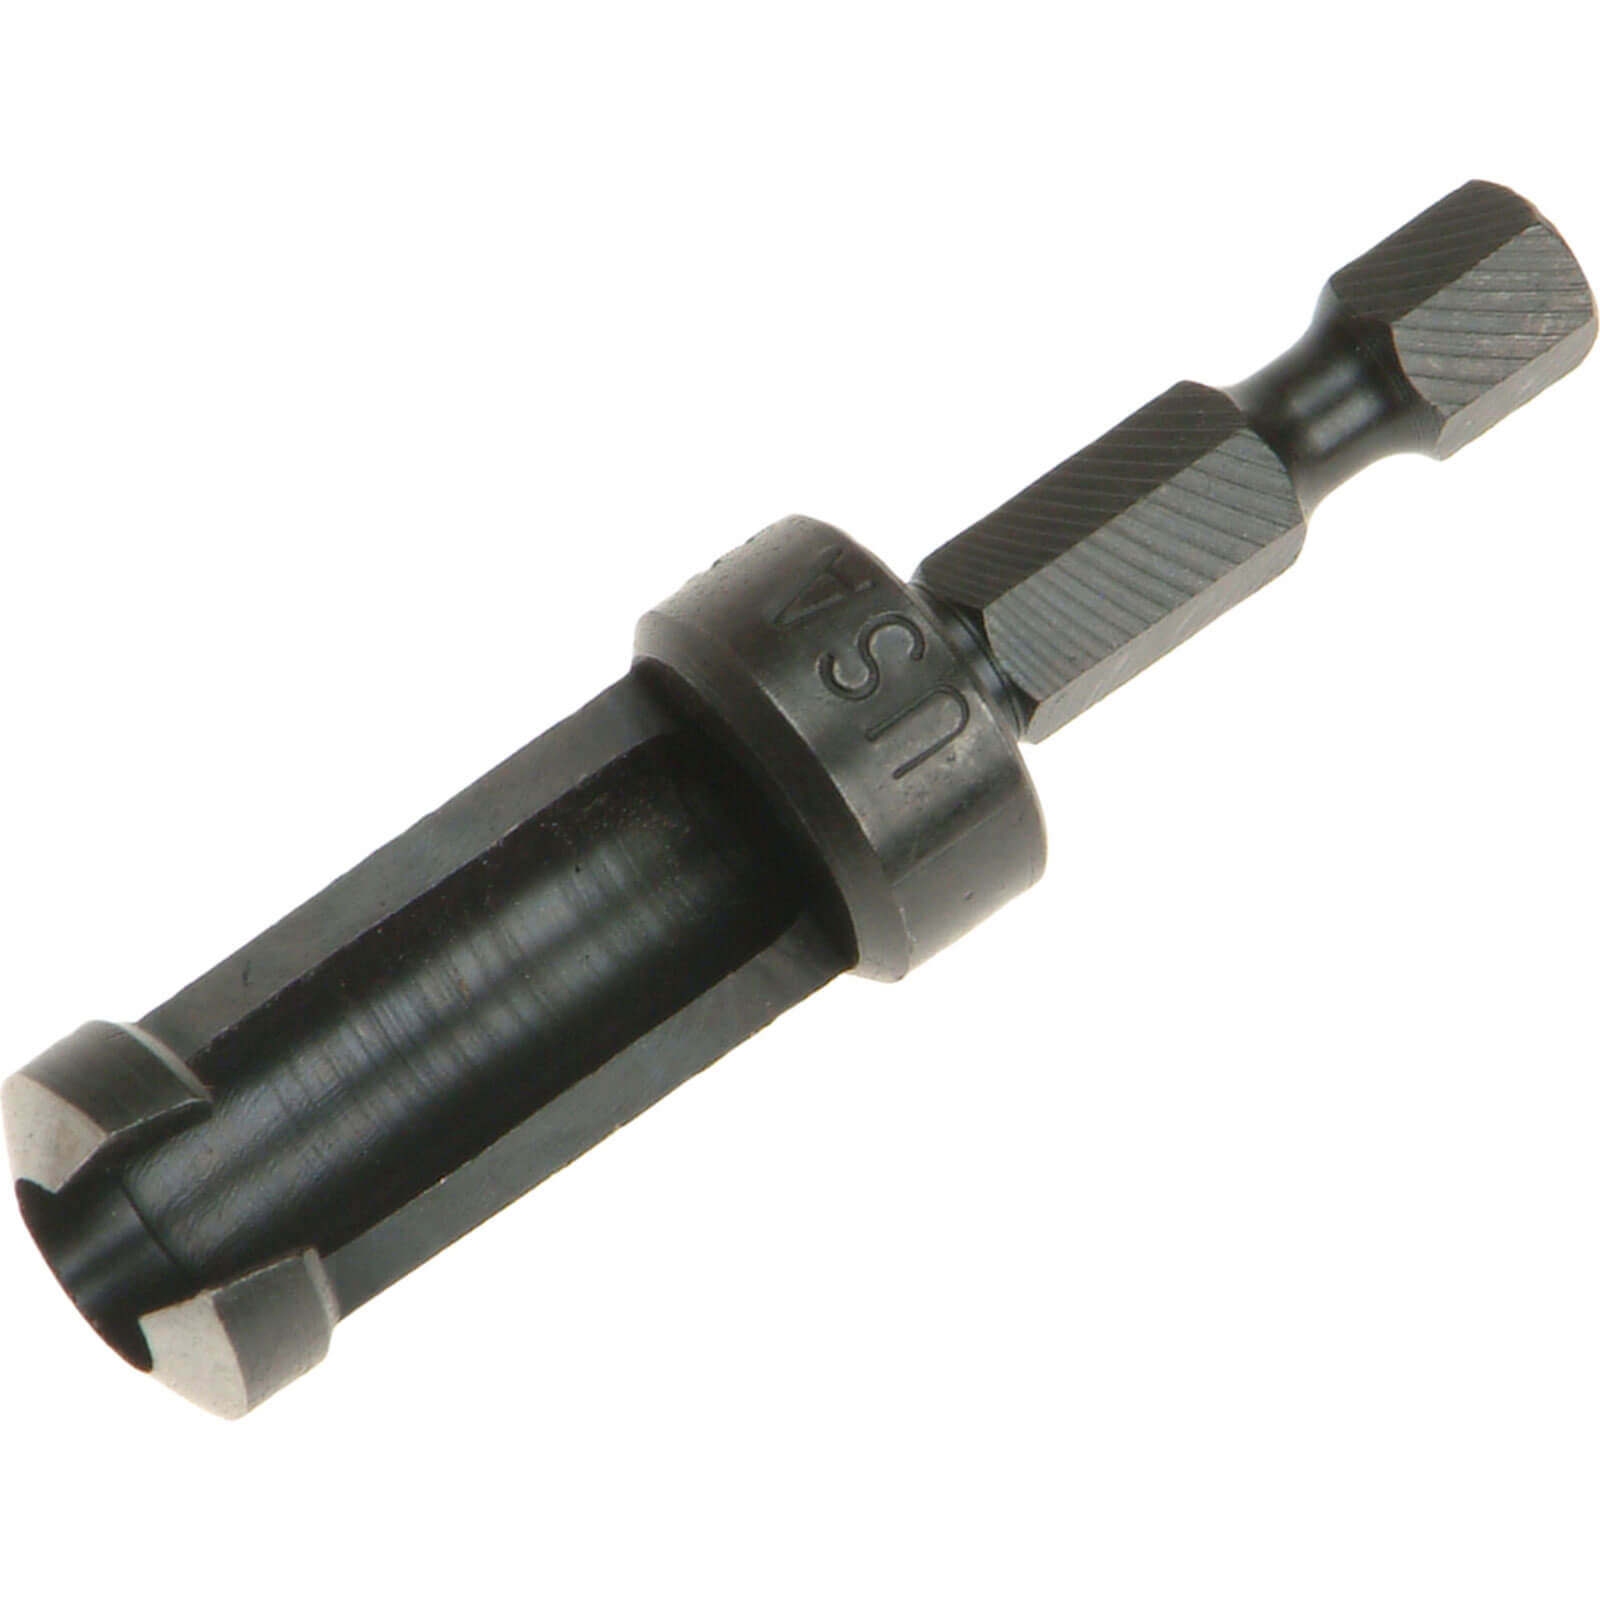 Photo of Disston Plug Cutter Size 6